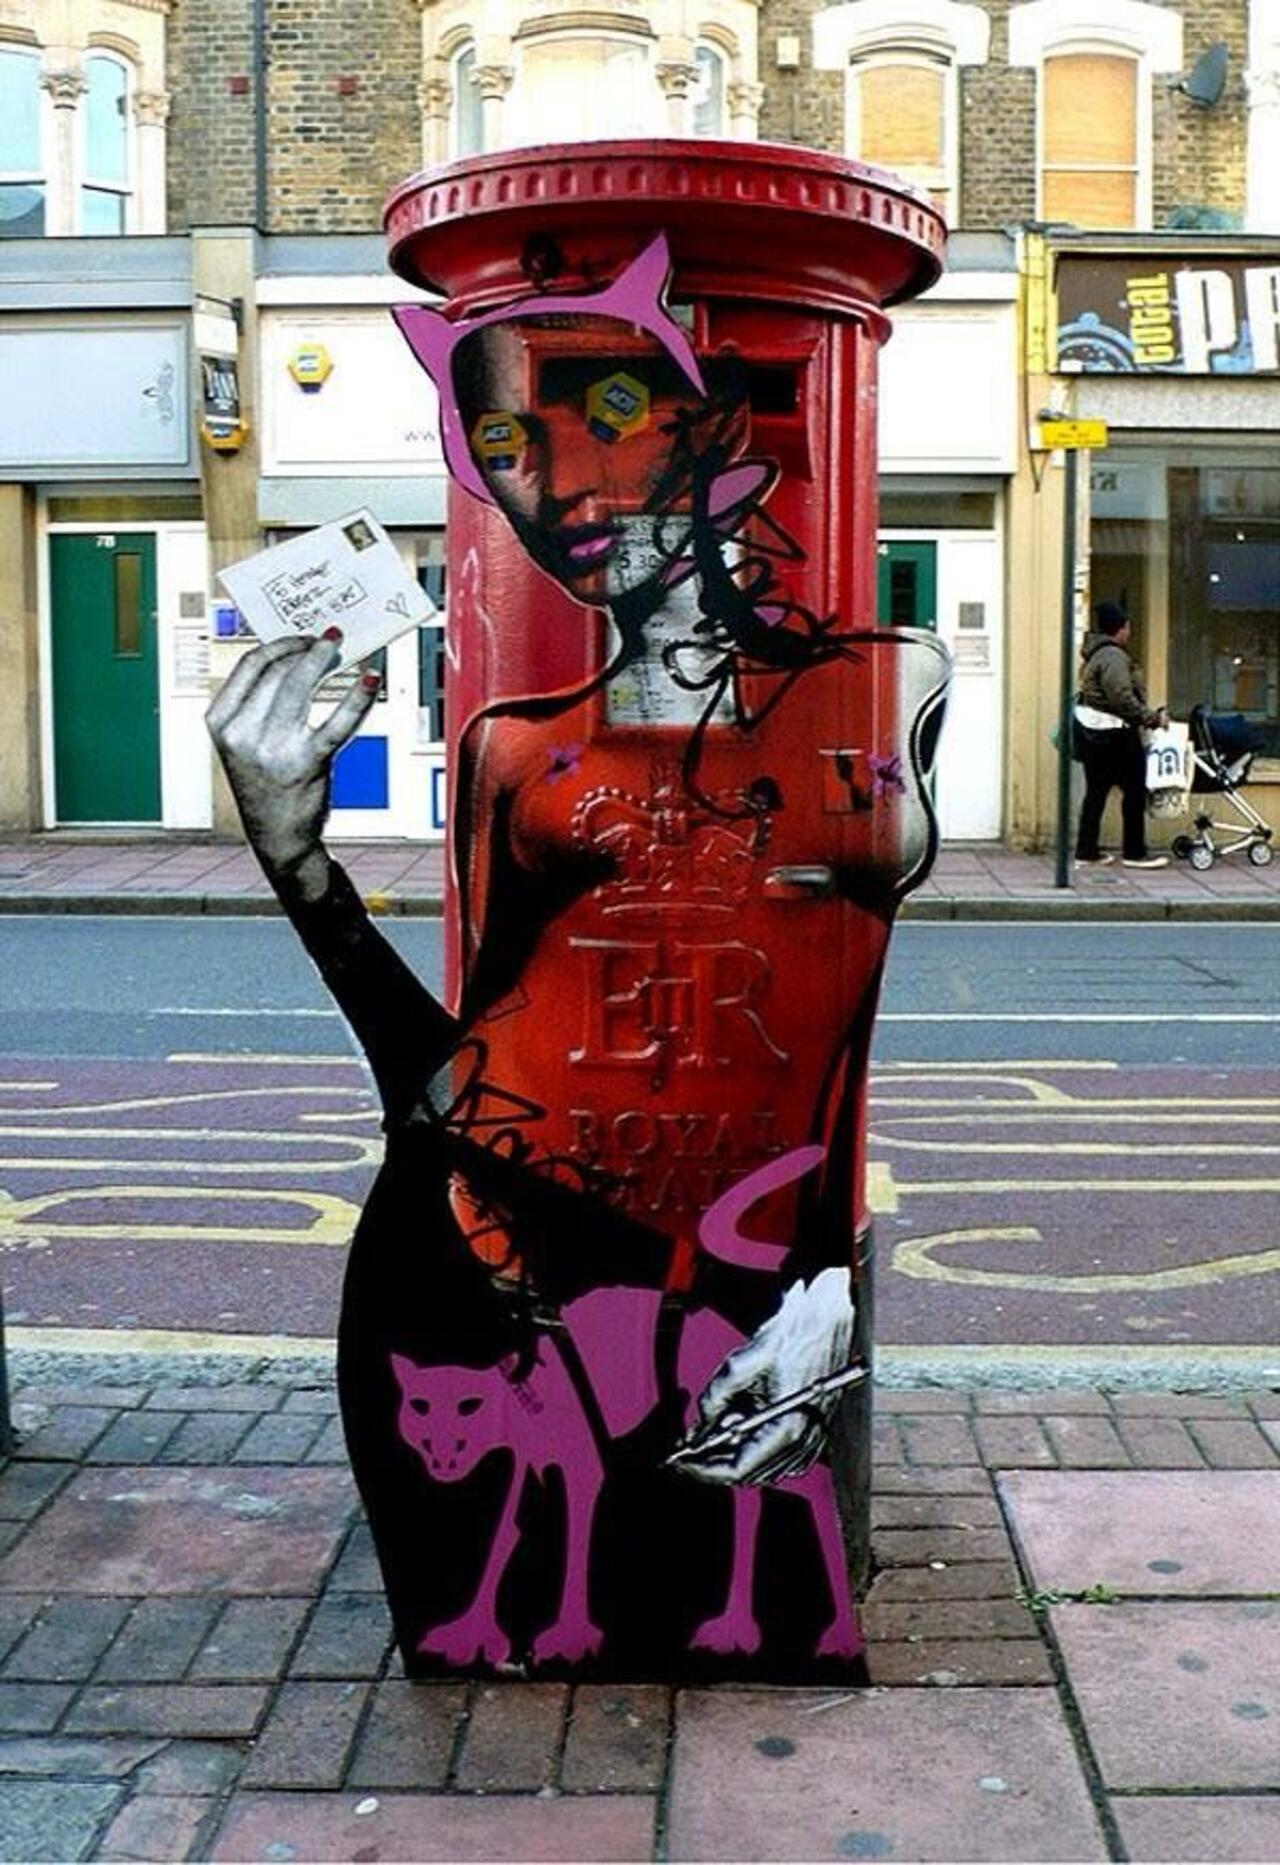 Artist Miss Bugs very clever Street Art piece in London, UK #art #graffiti #streetart http://t.co/dxJO6lUevF